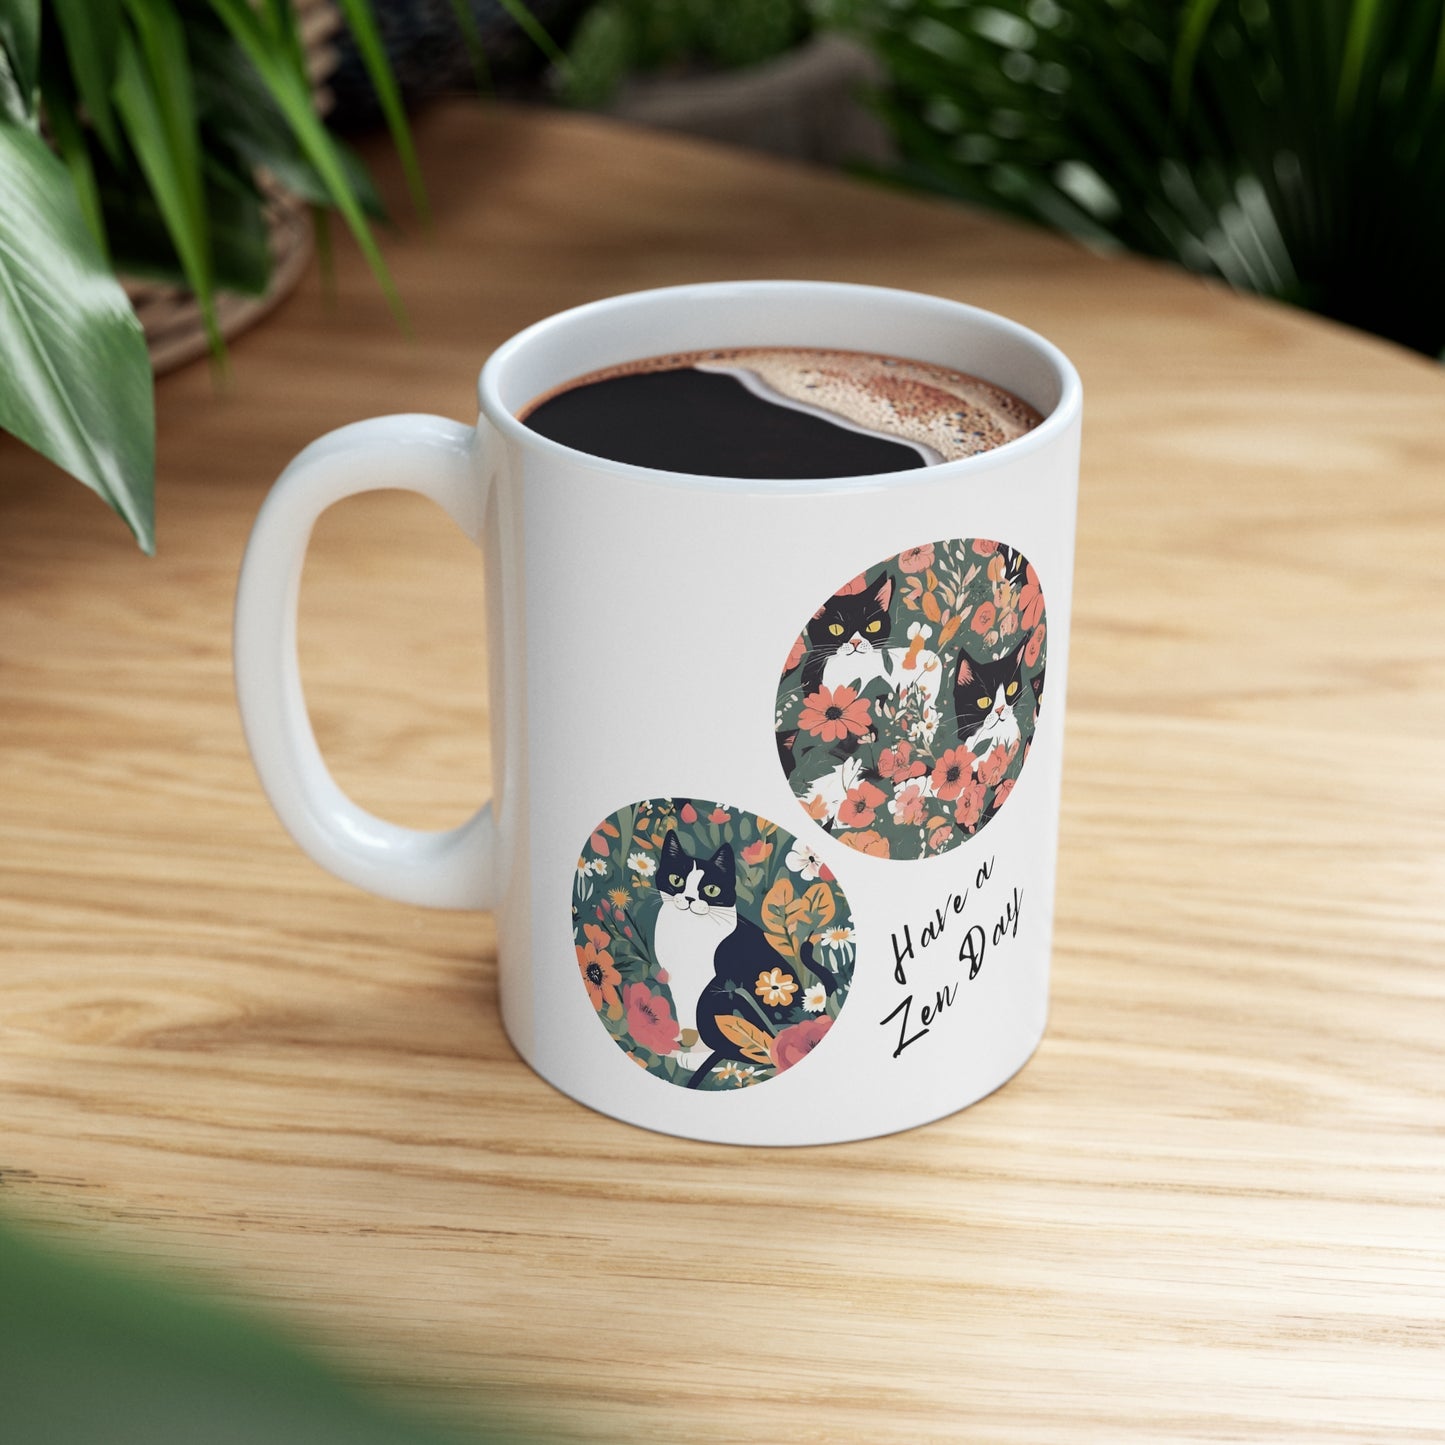 Cat Lady Coffee Mug - "Have a Zen Day" Floral Motif - Ceramic - 11oz